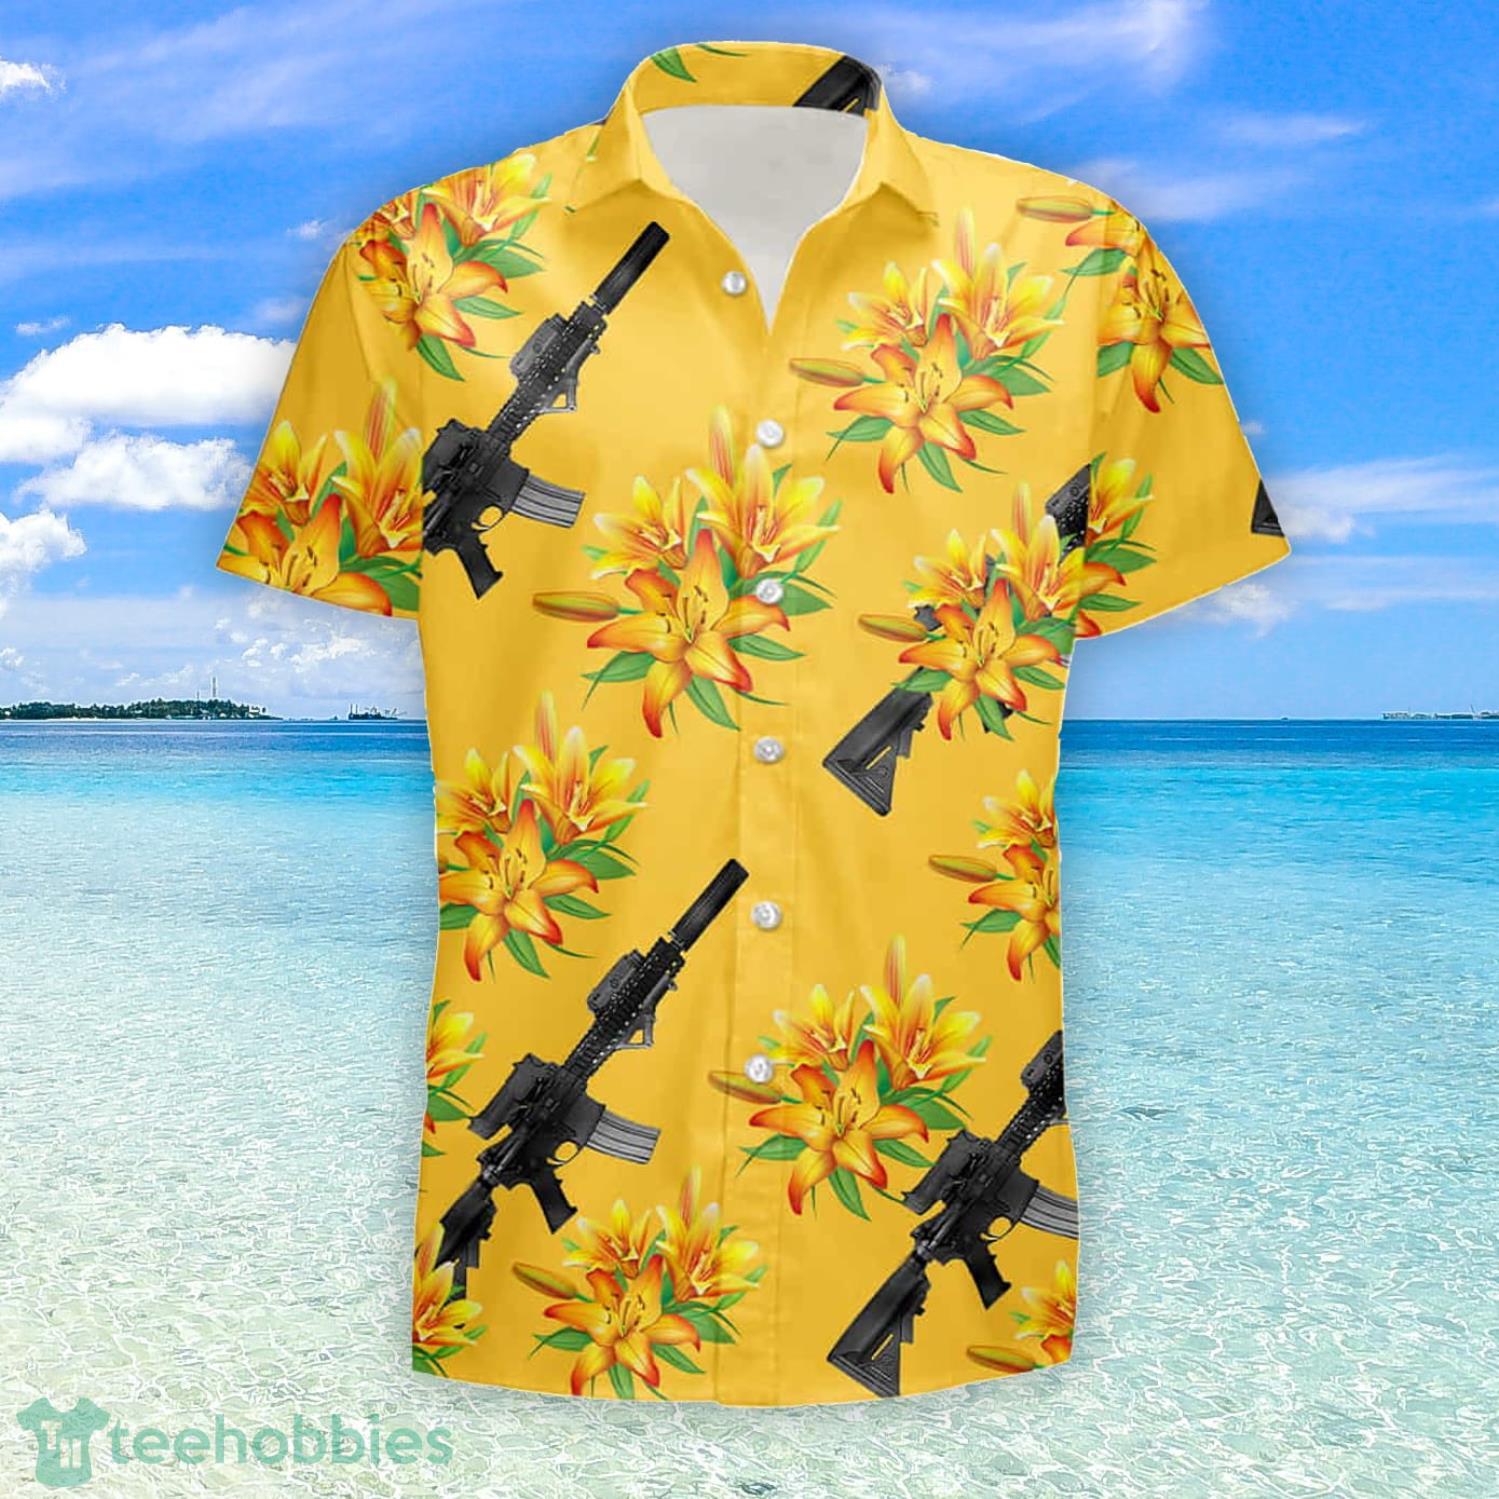 MLB Logo Baltimore Orioles Aloha Summer Hawaiian Shirt For Men And Women -  Freedomdesign